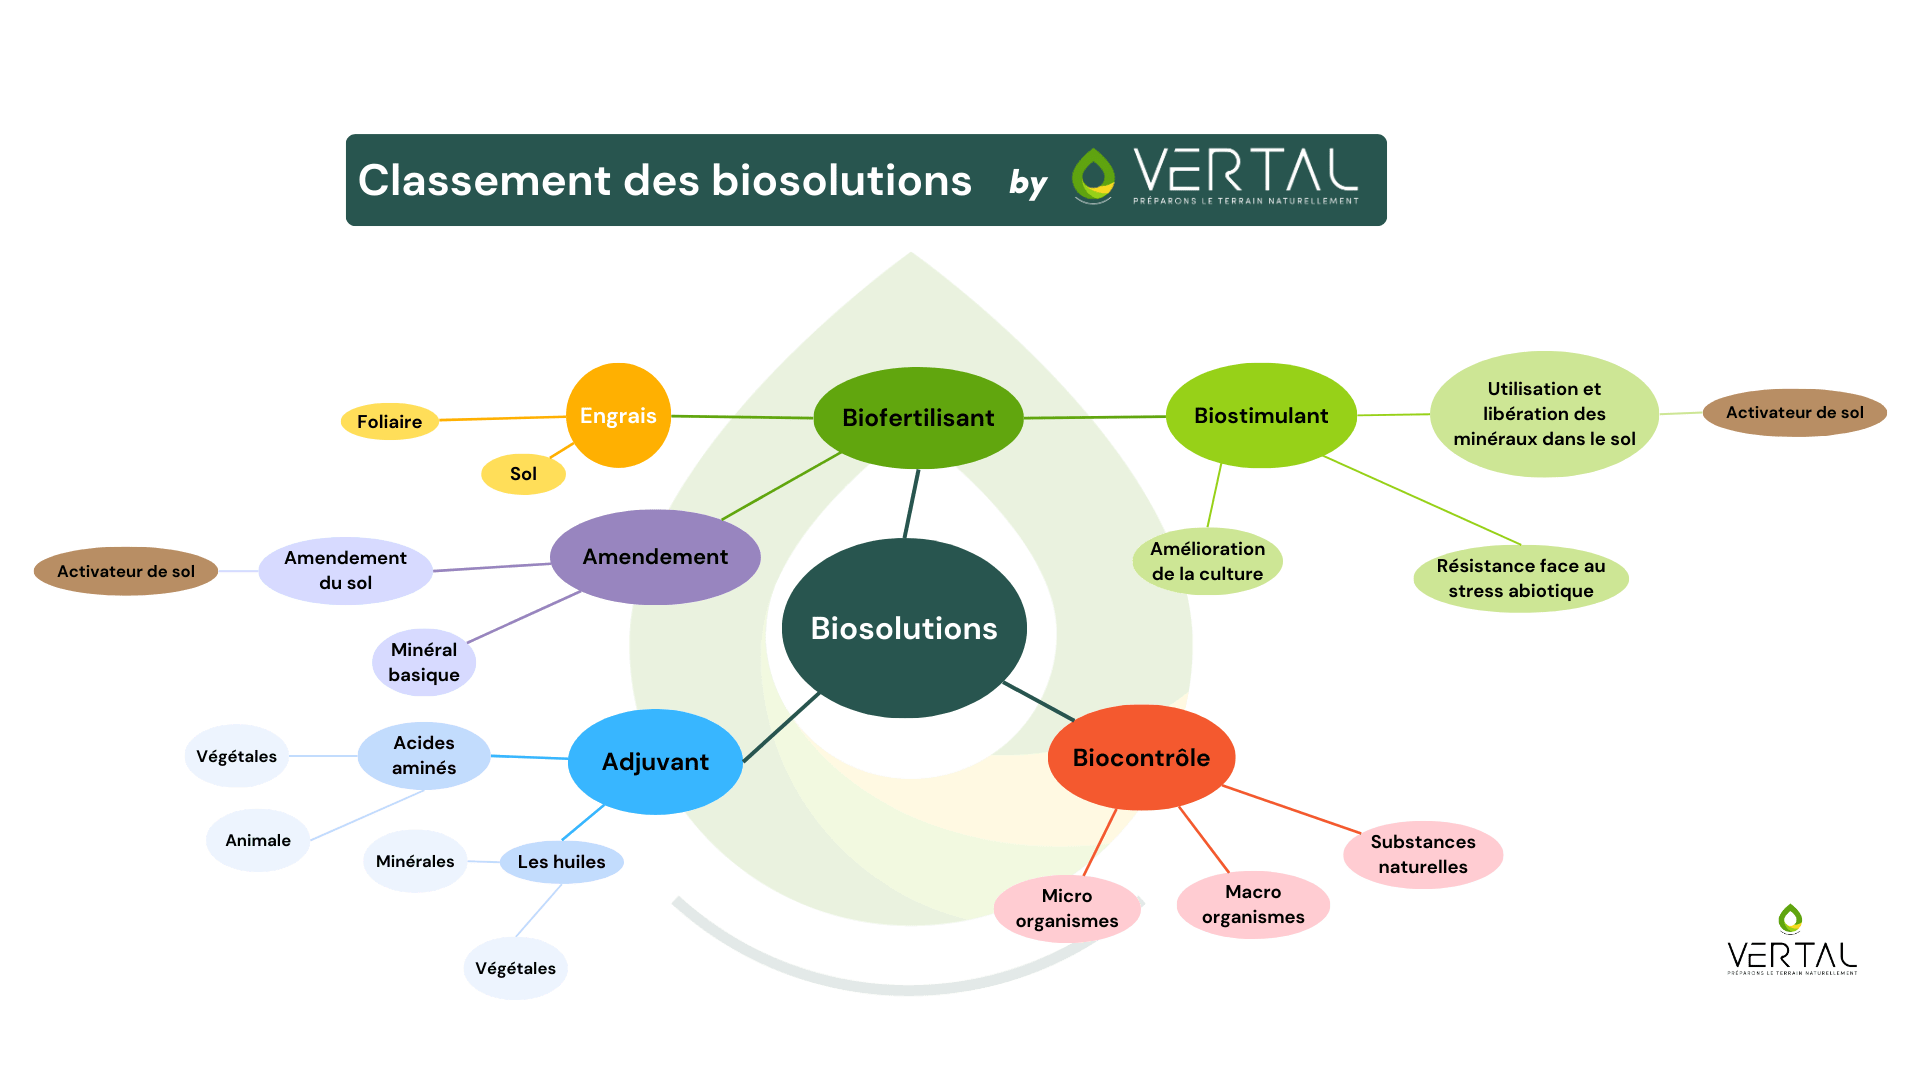 Classement des biosolutions by VERTAL